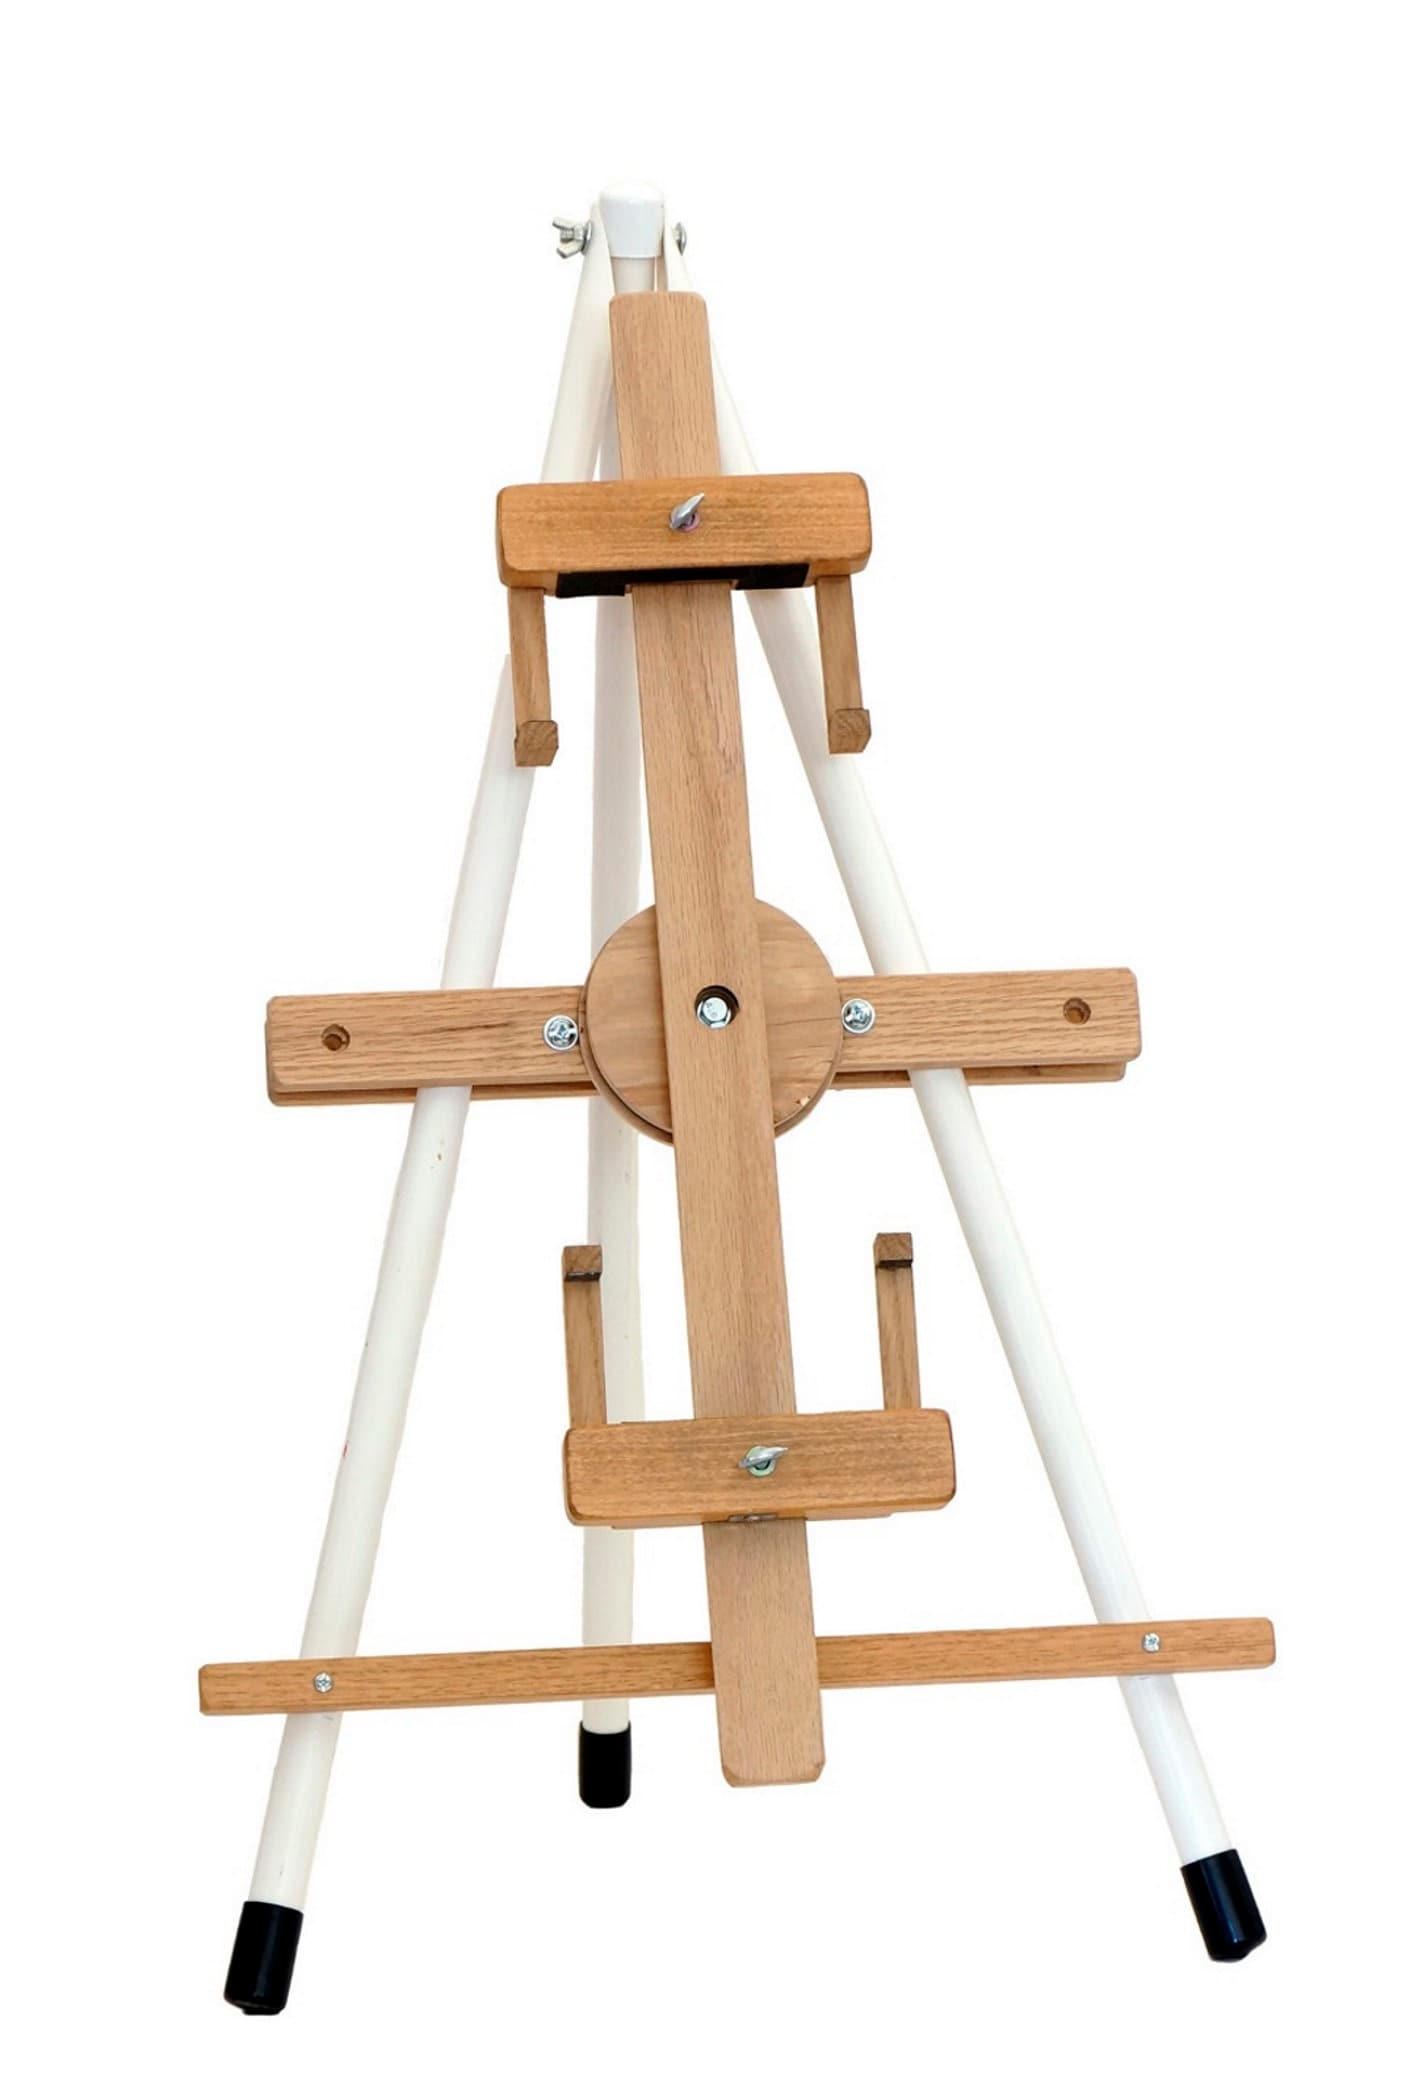 Movable Artist Studio Easel Wooden Art Stand H-Frame Adjustable Large 56 to  91